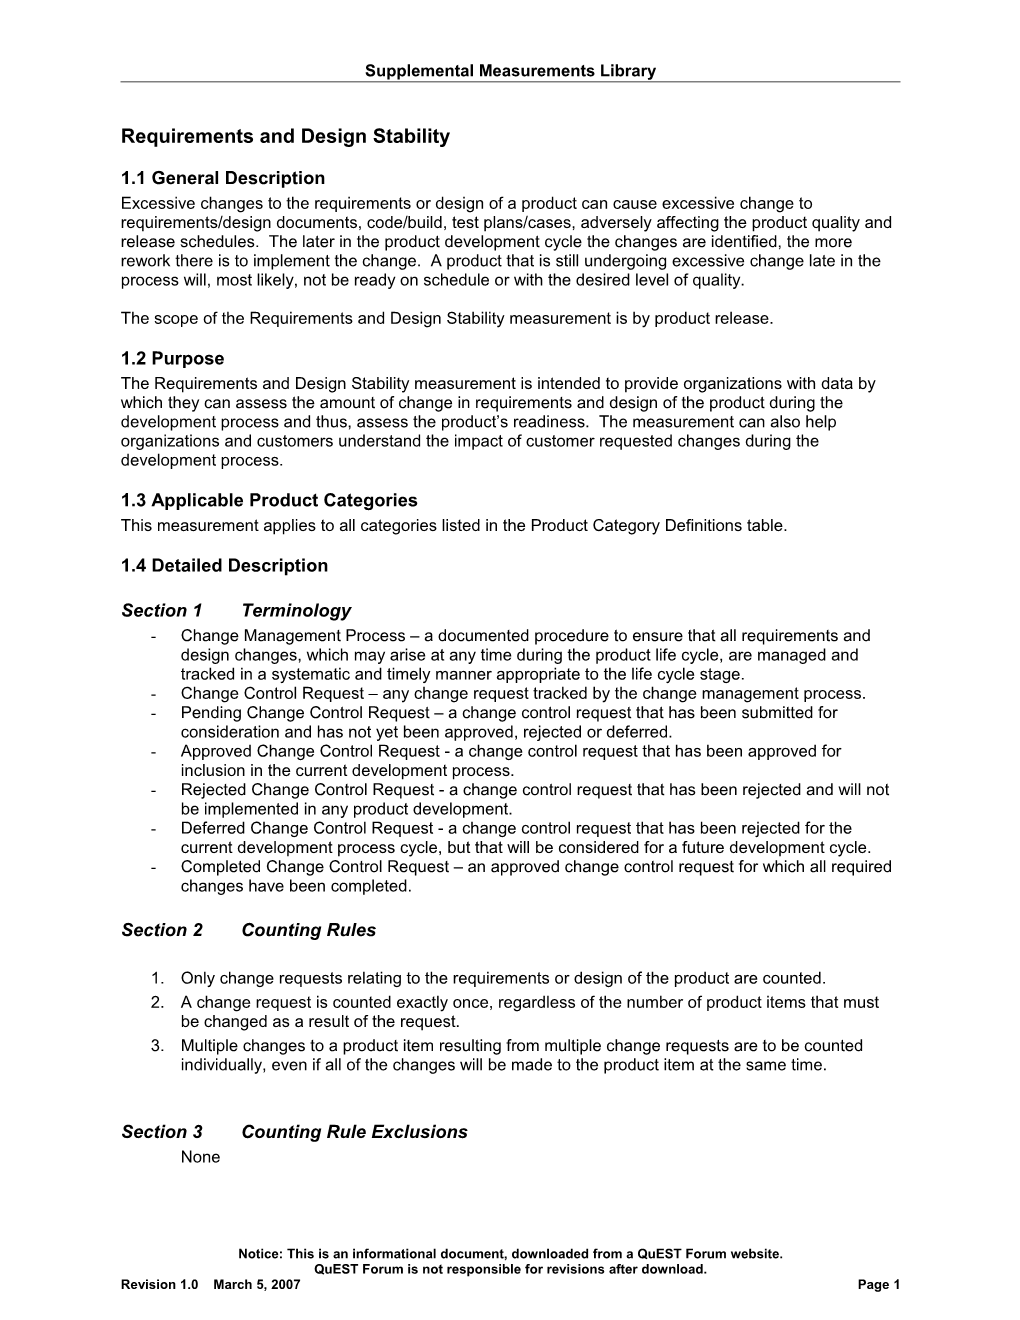 Tl 9000 Requirements Handbook 4.0